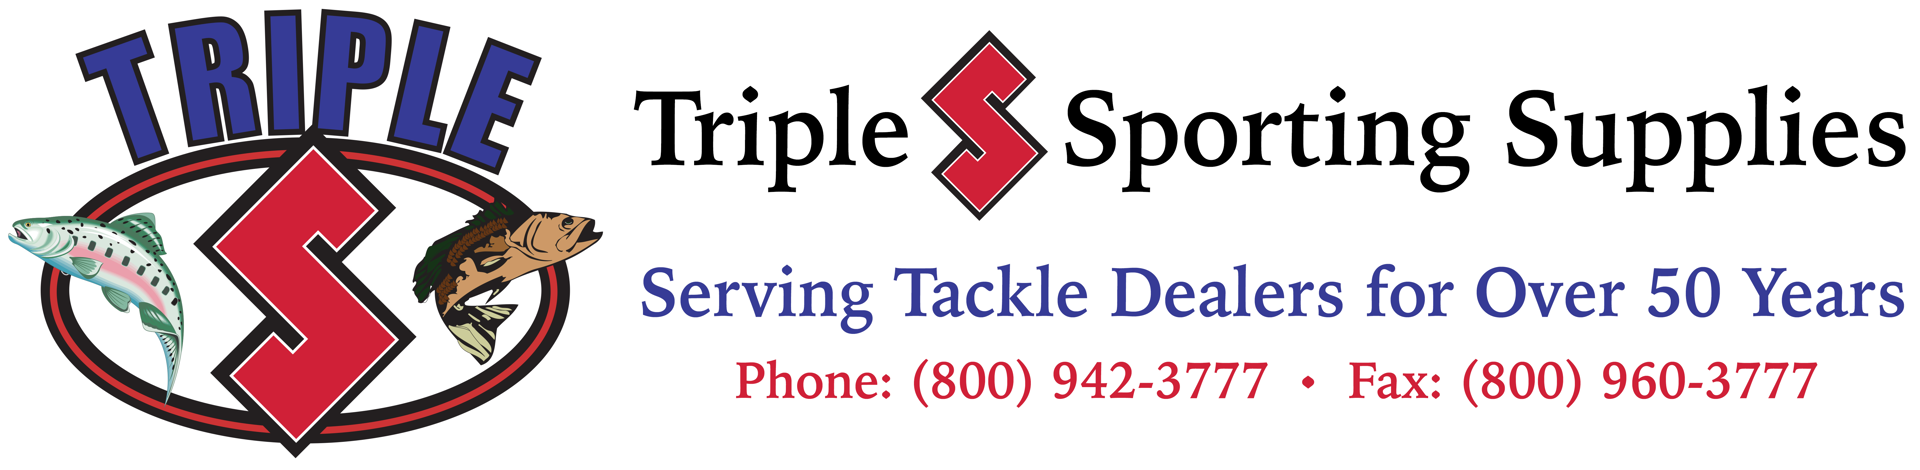 Triple S Sporting Supplies. Triple S Sporting Supplies